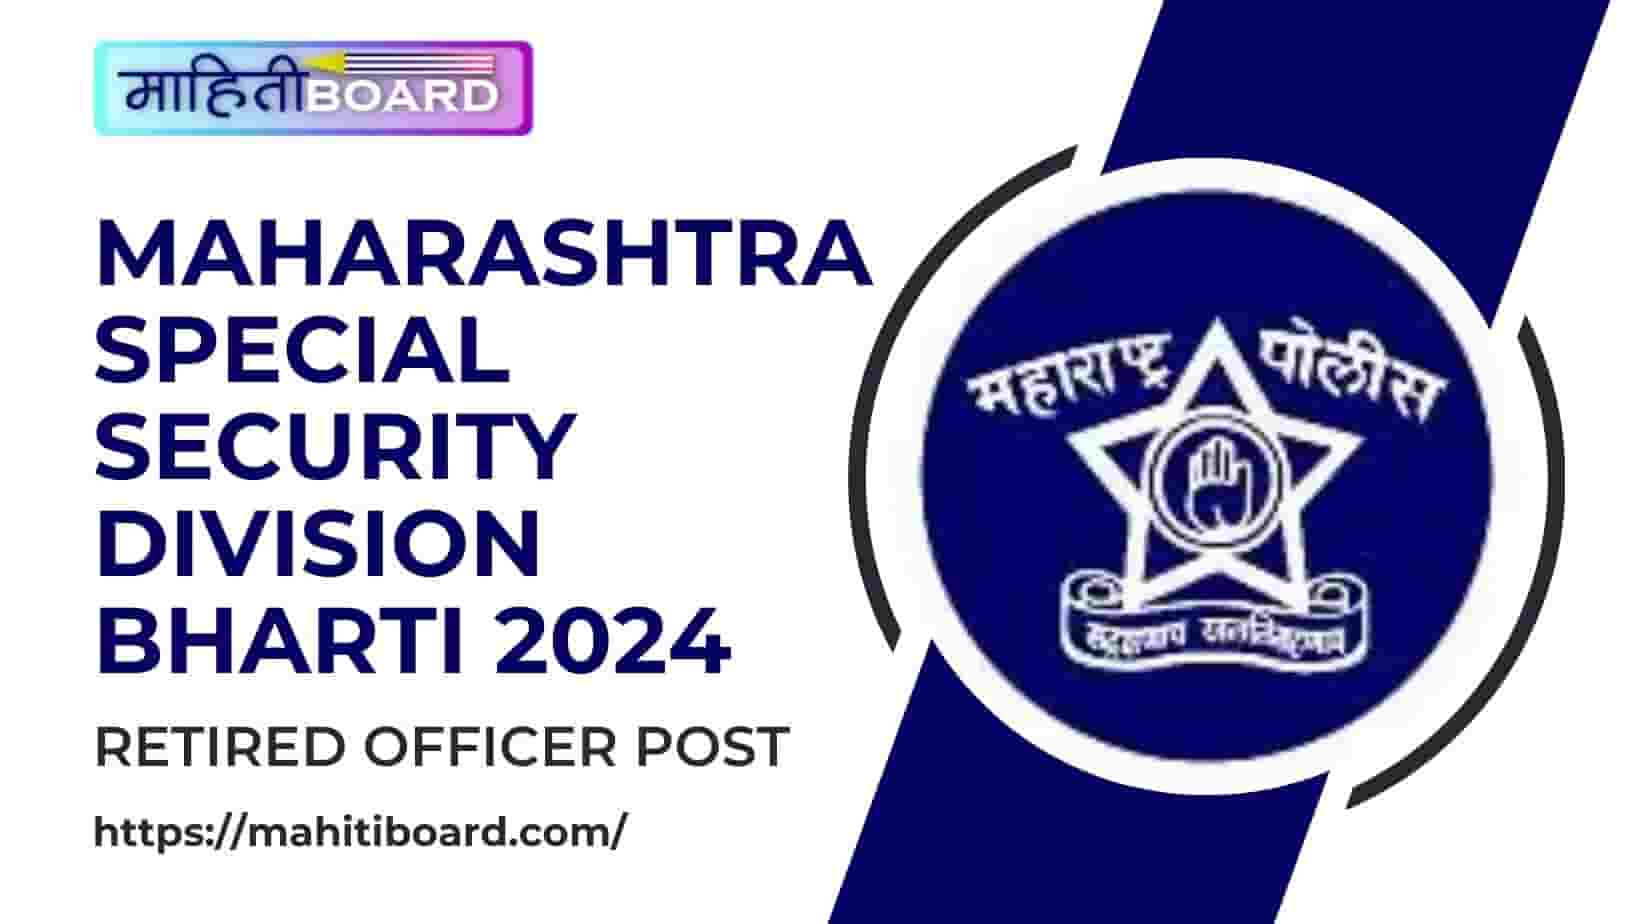 Maharashtra Special Security Division Bharti 2024